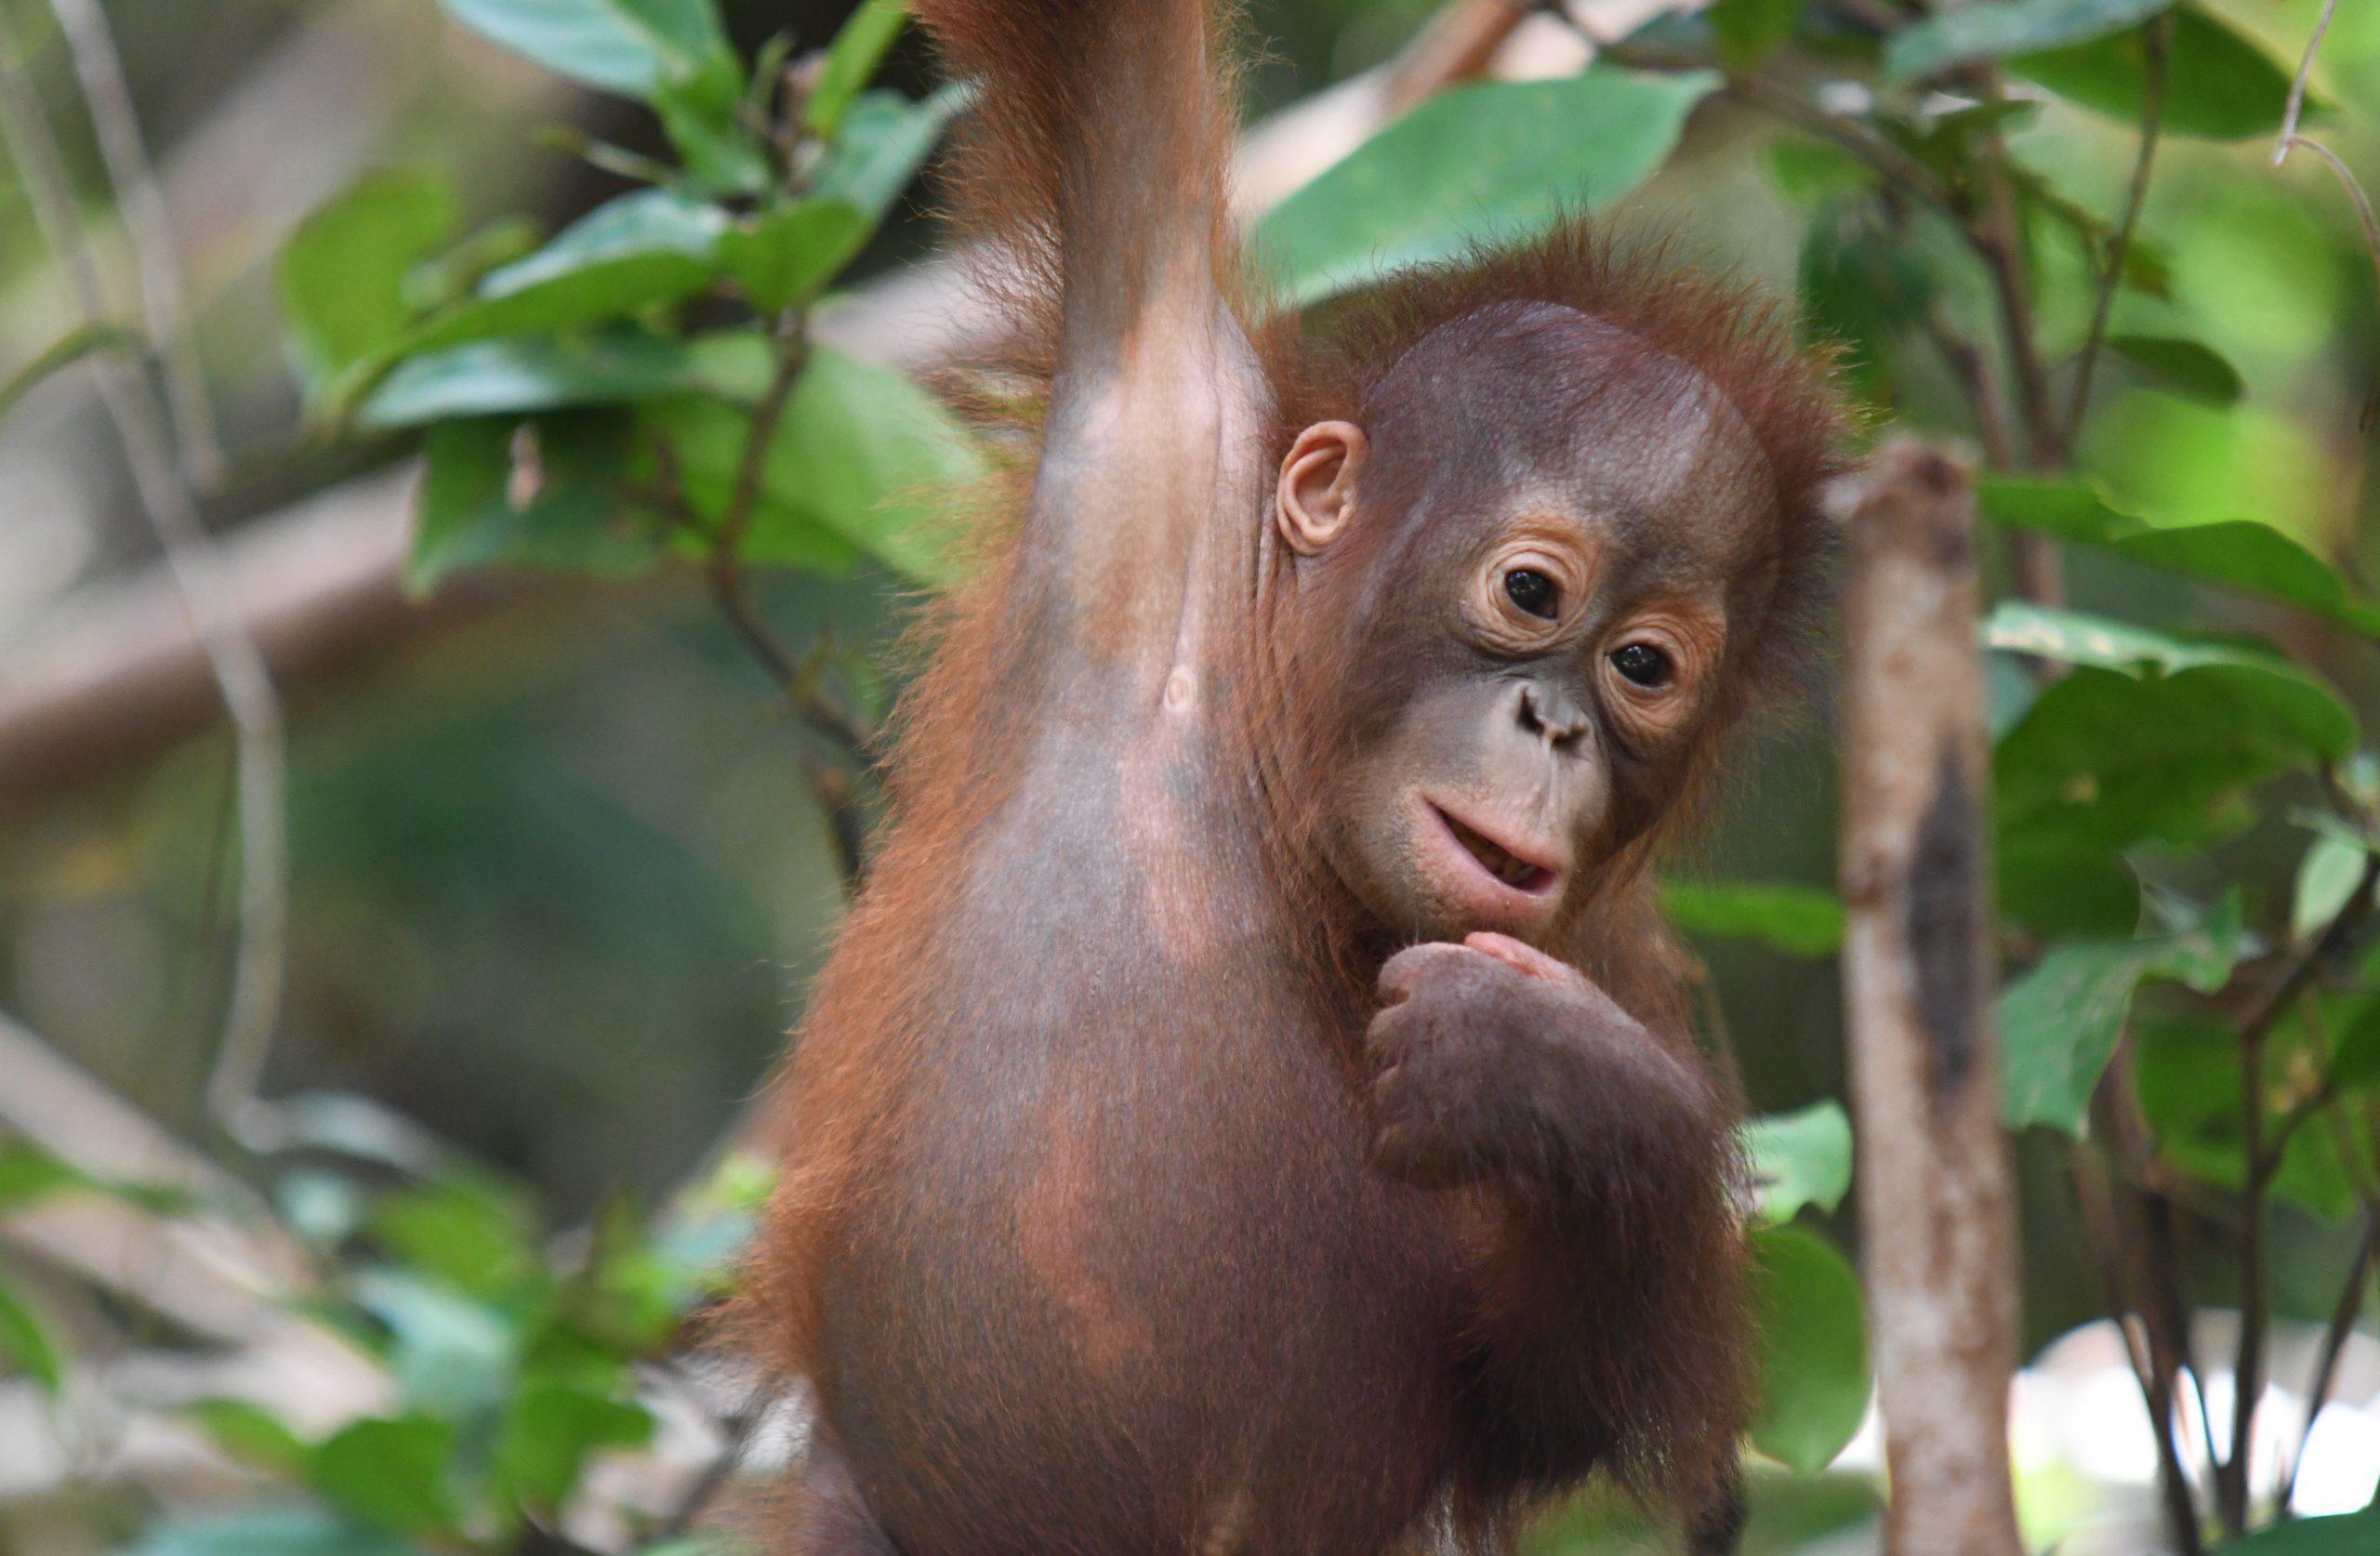 Hello, Avo! Avoskin's Fourth Orangutan x BOS Sustainibility Movement